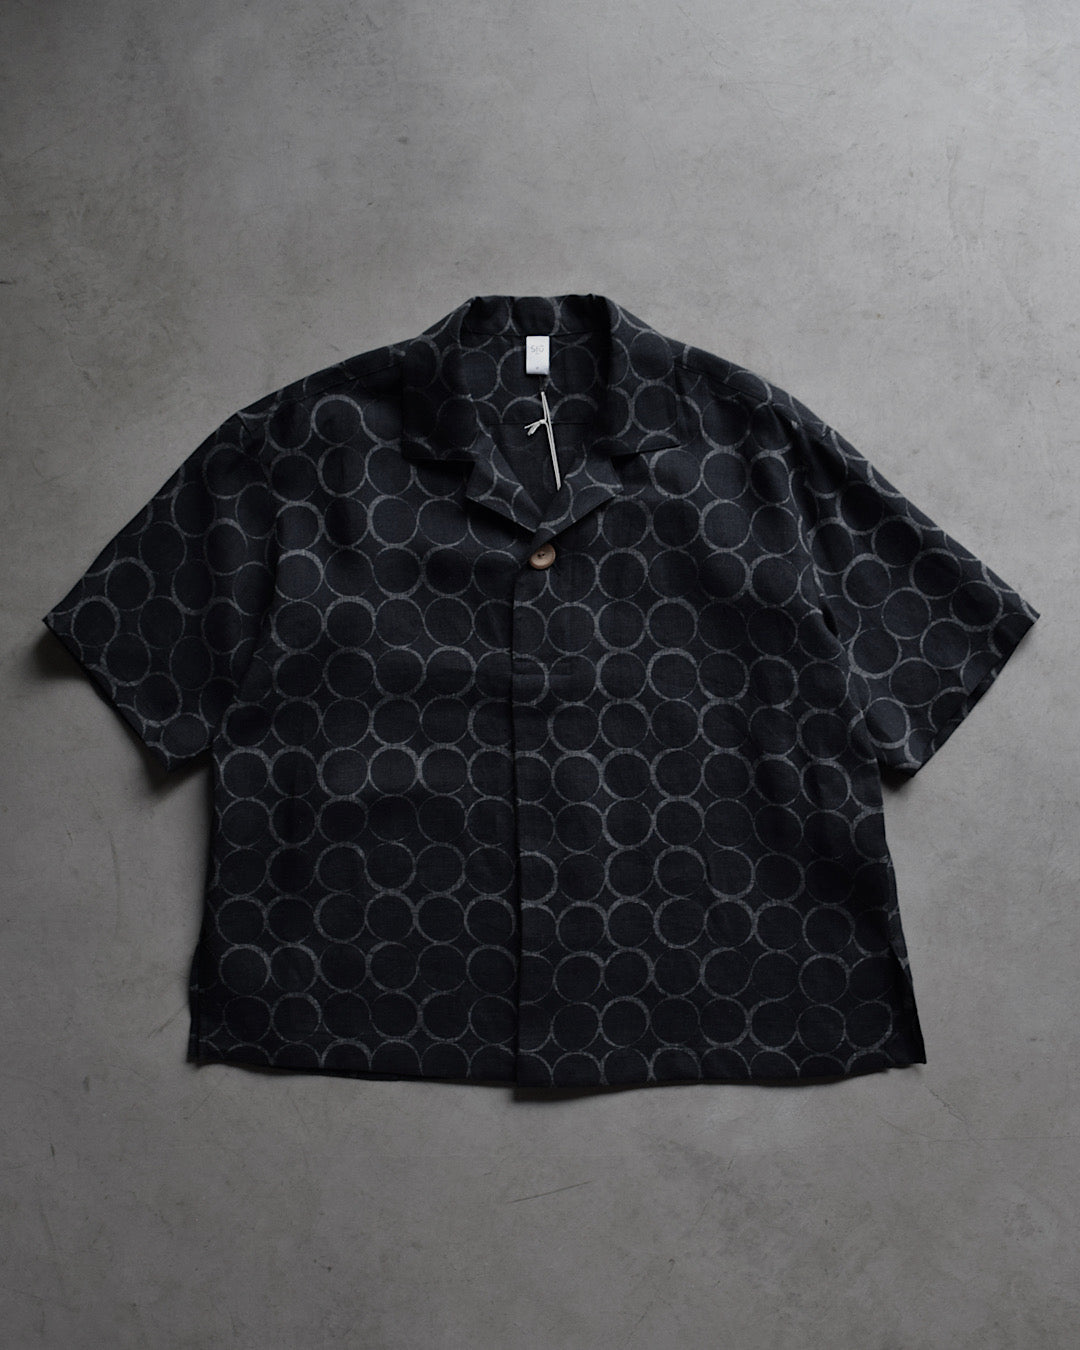 satou / "engawa skipper shirt" - black